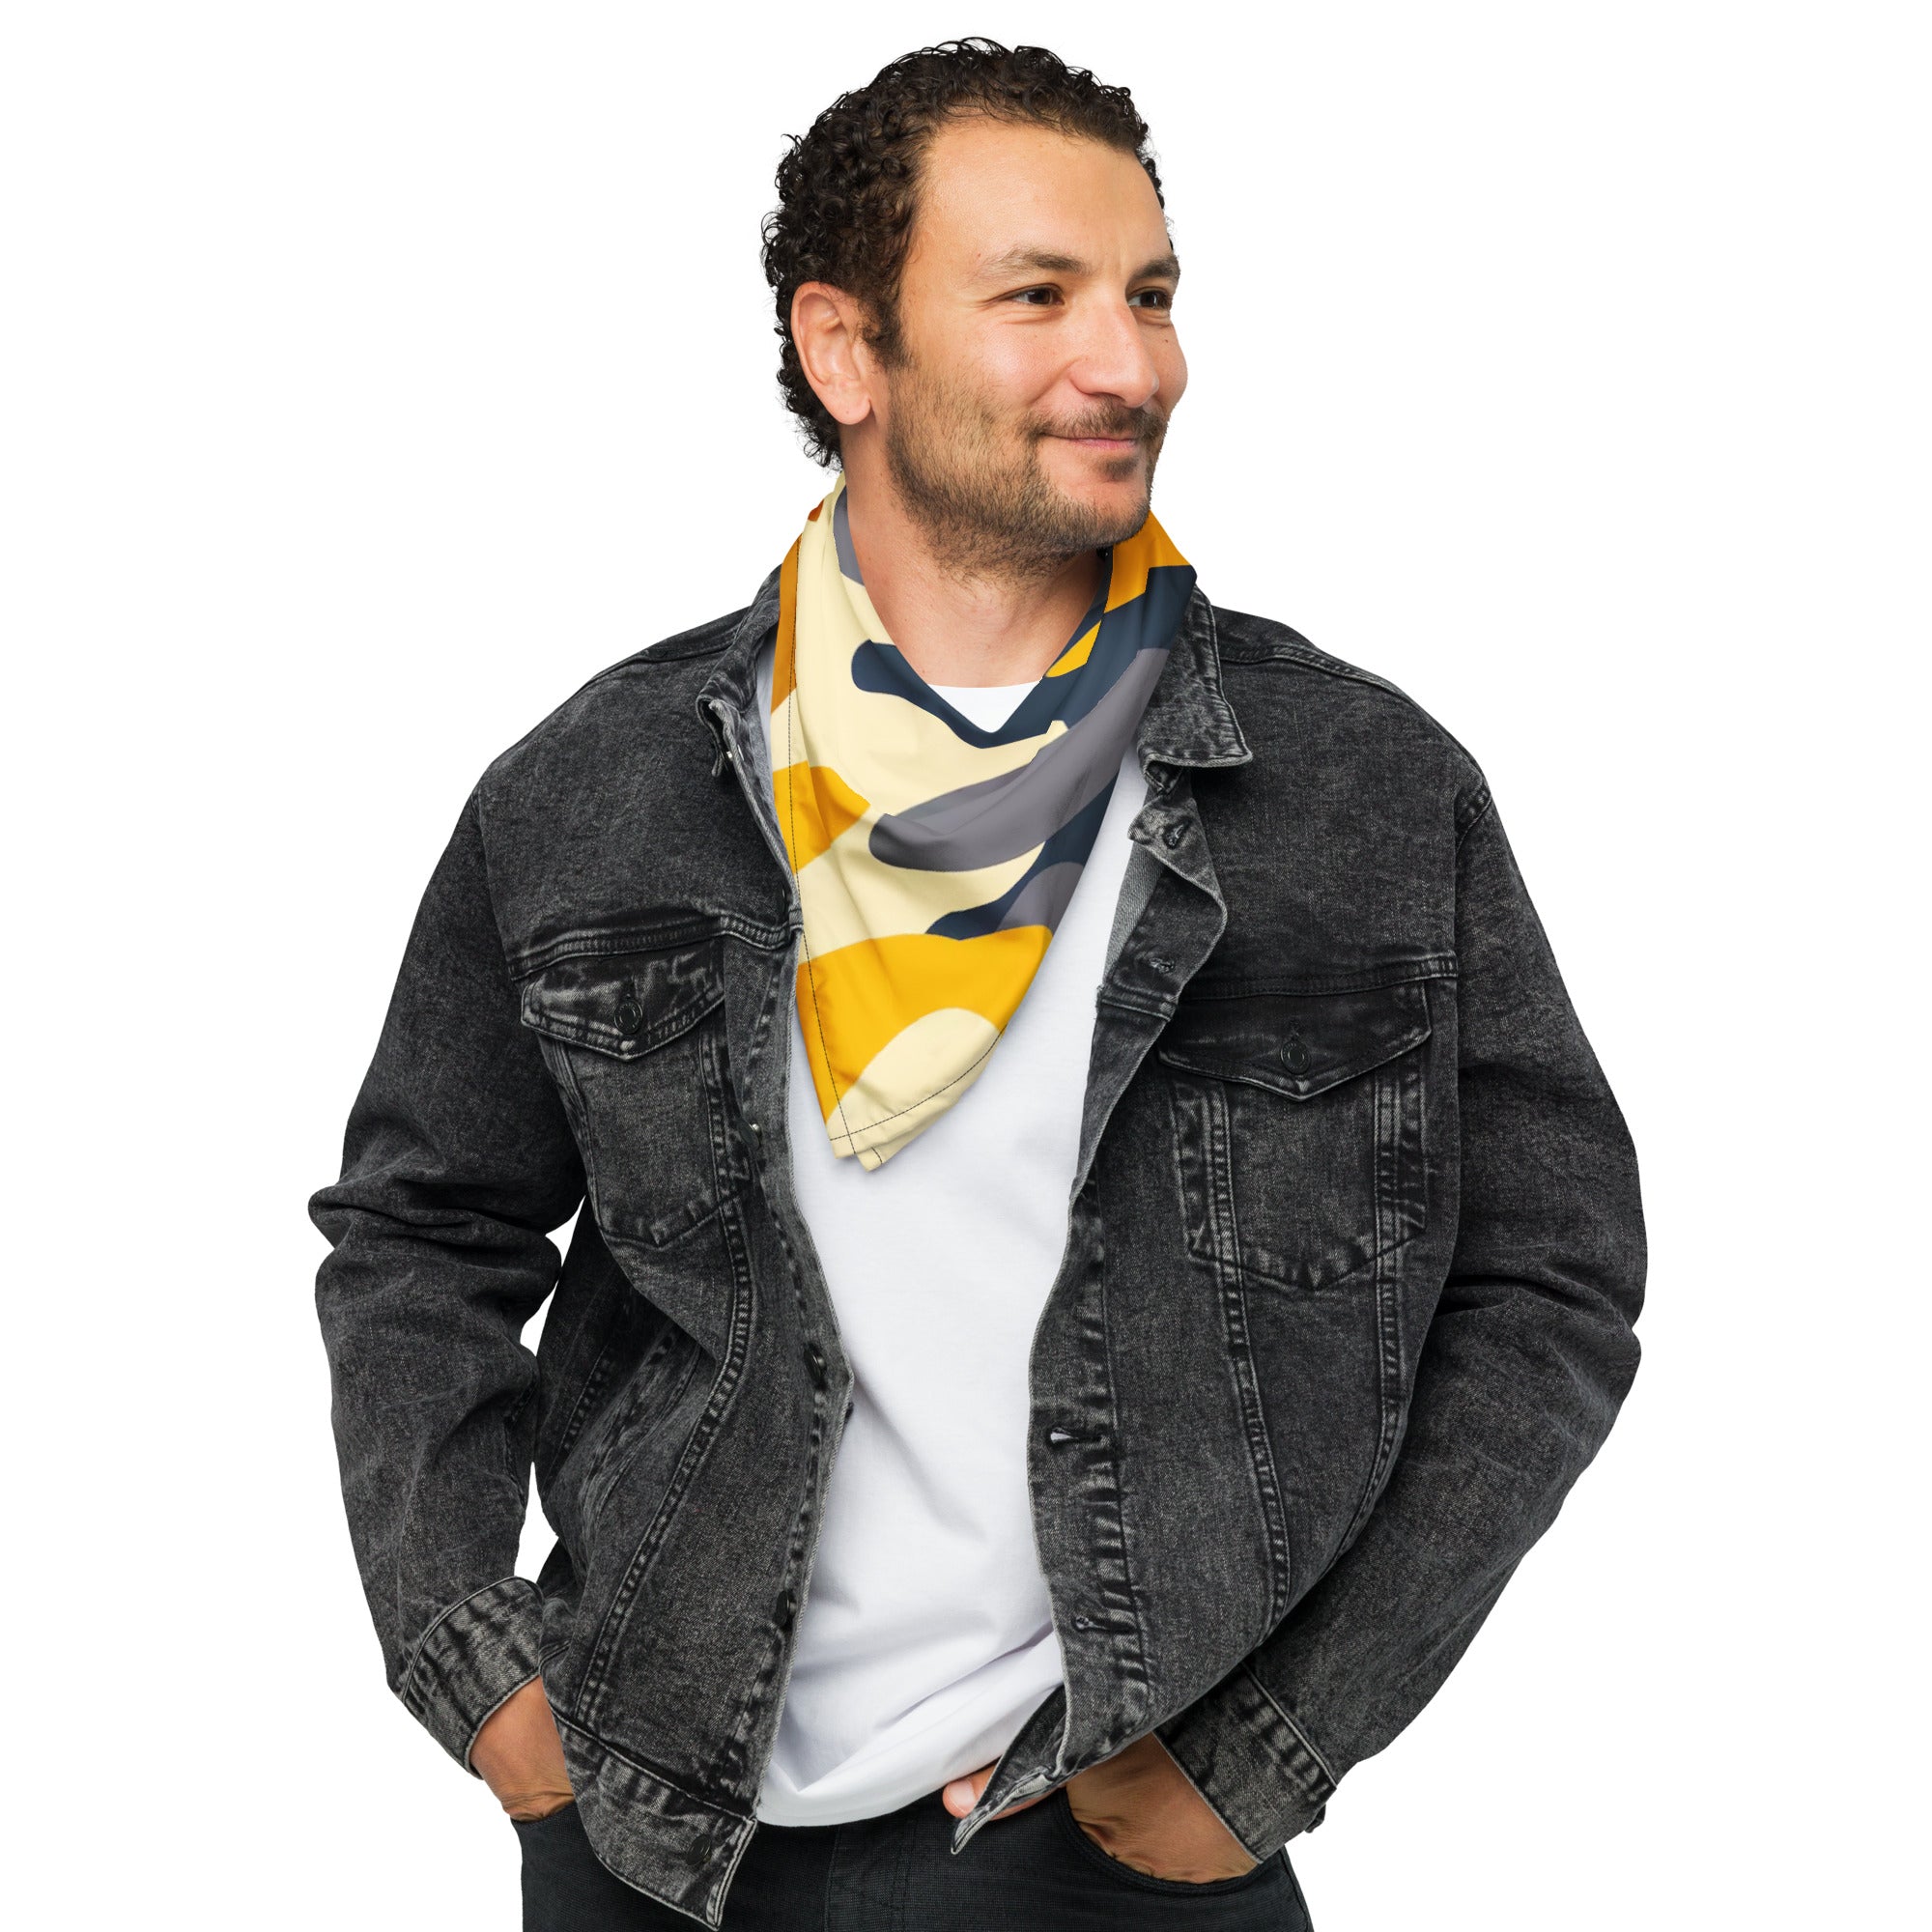 Camo pants and sherpa lined denim jacket